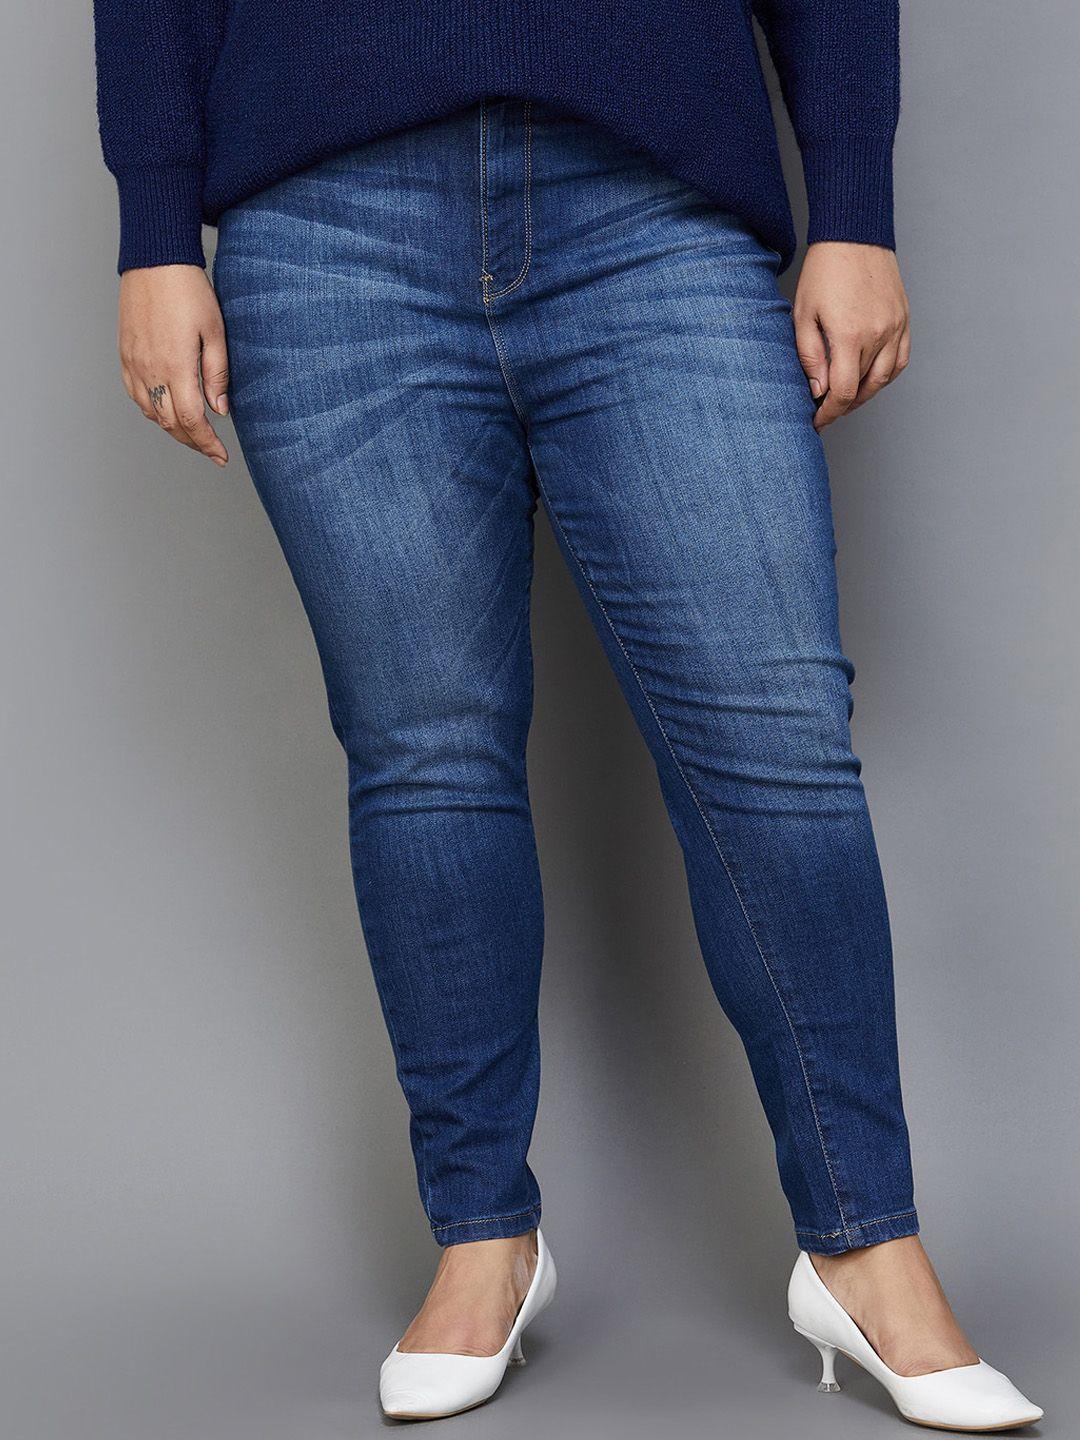 nexus by lifestyle women skinny fit slash knee light fade jeans